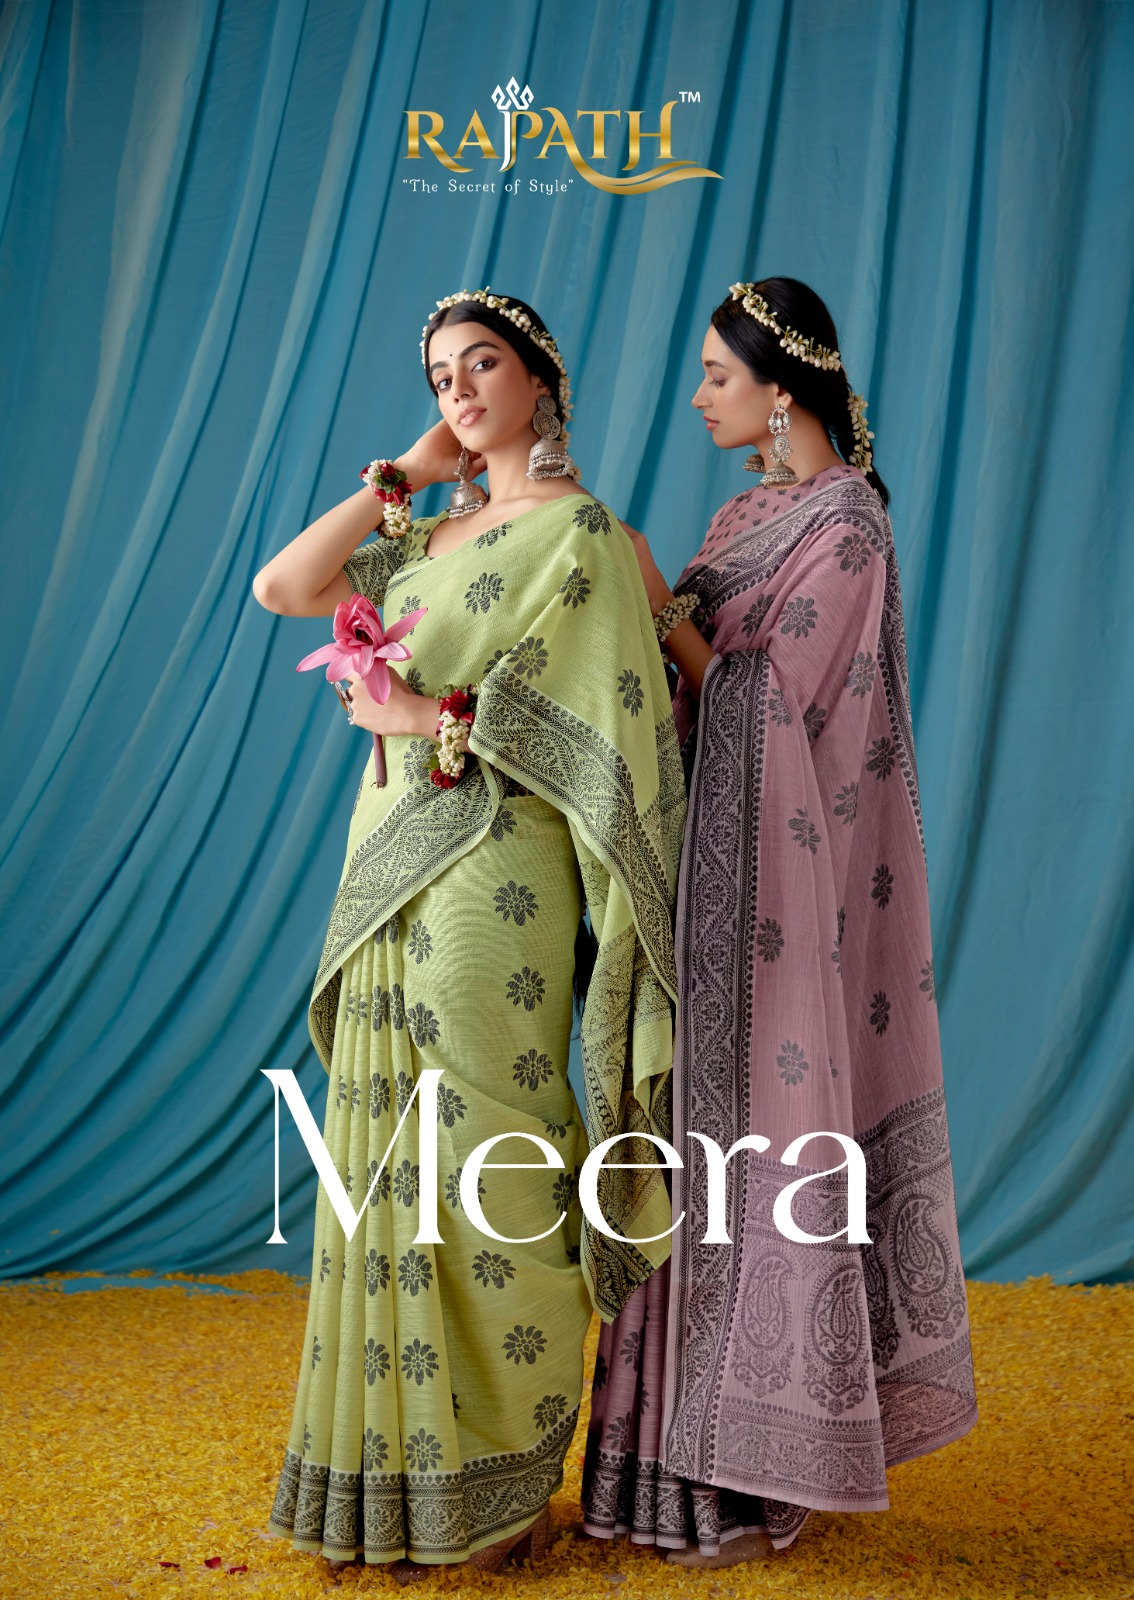 Rajpath Meera collection 10